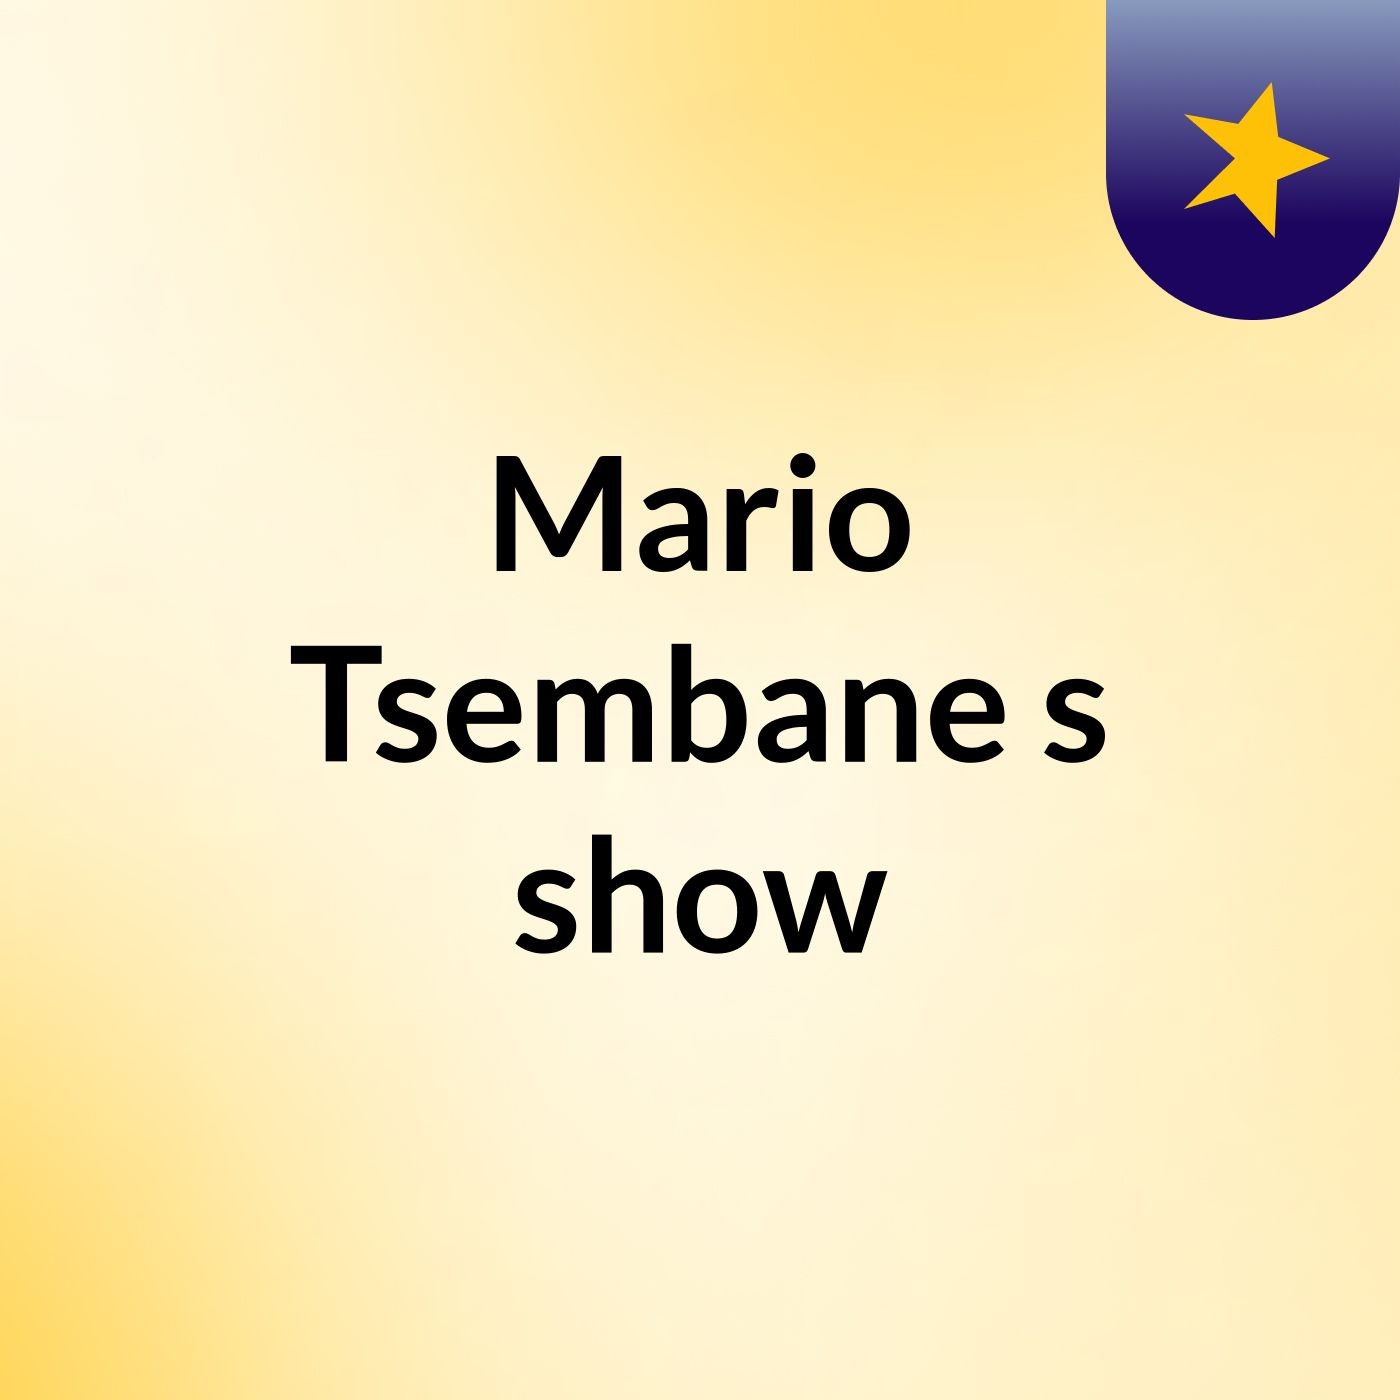 Mario Tsembane's show